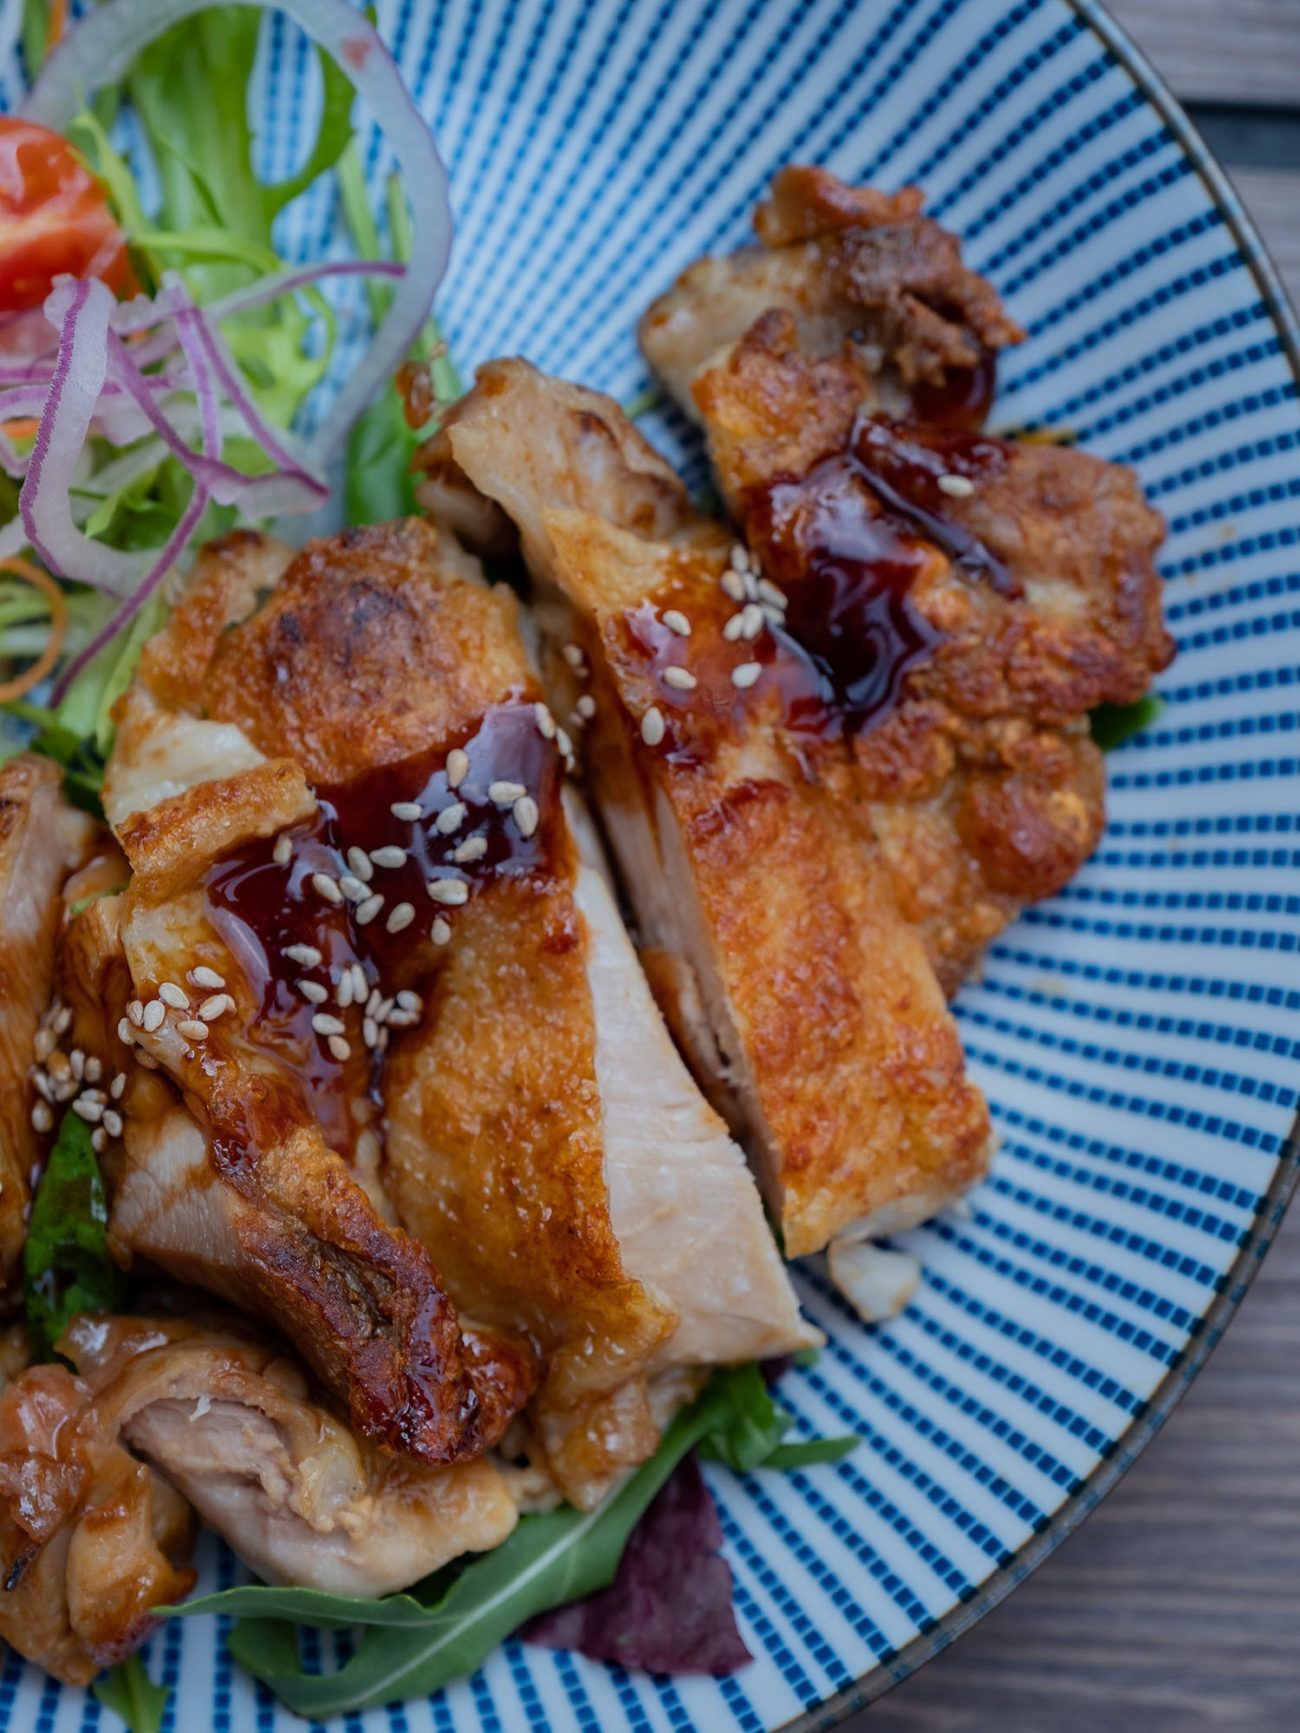 Foodblog About Fuel, Restaurant CHOTTO Berlin, Chicken Teriyaki